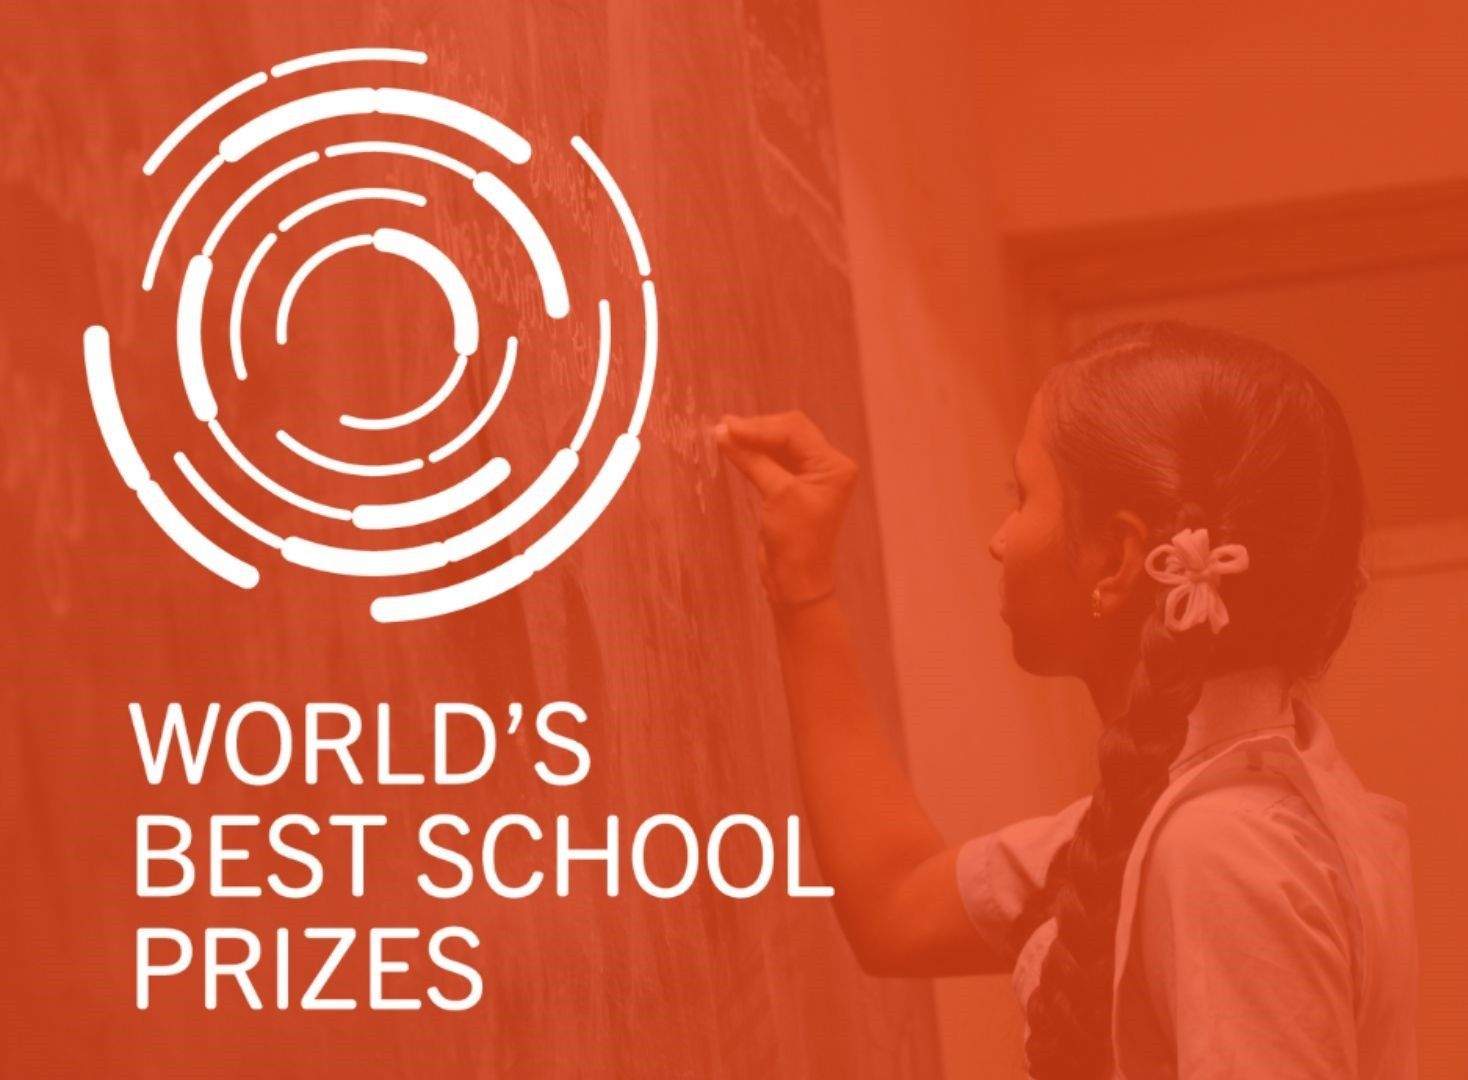 3 Philippine public schools shortlisted for Worldâs Best School Prizes